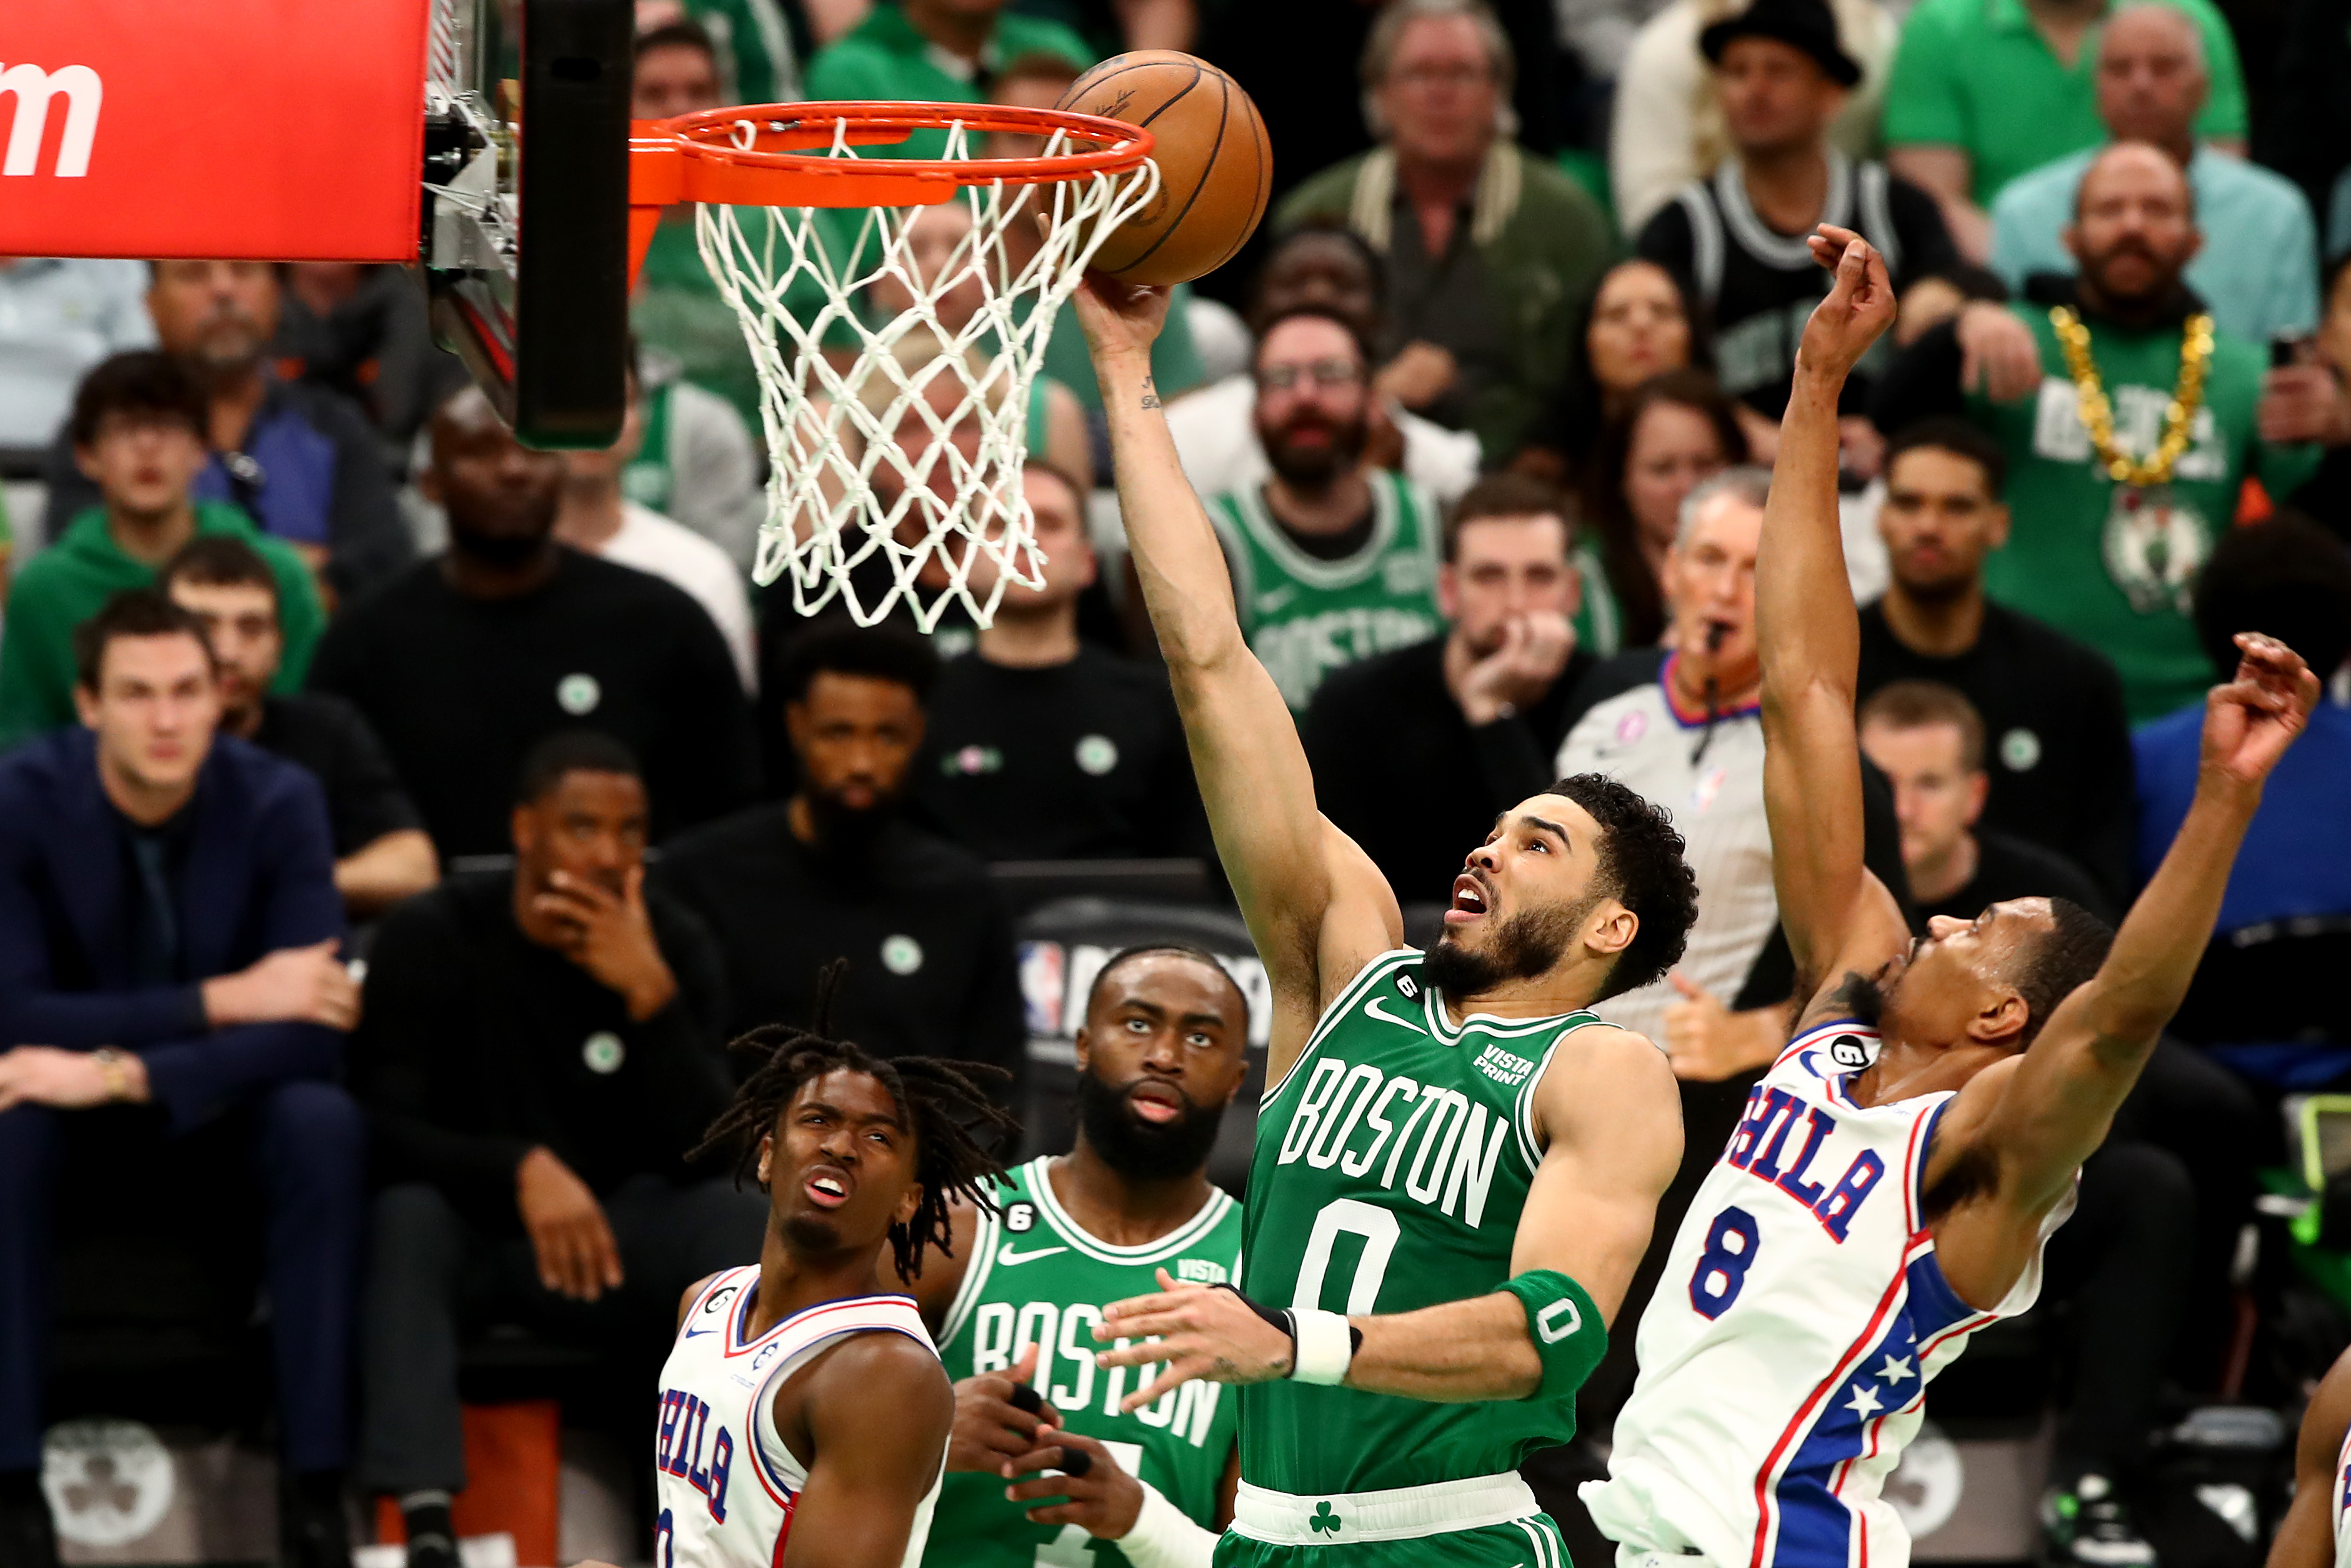 Jayson Tatum catches fire, Celtics beat 76ers to force Game 7